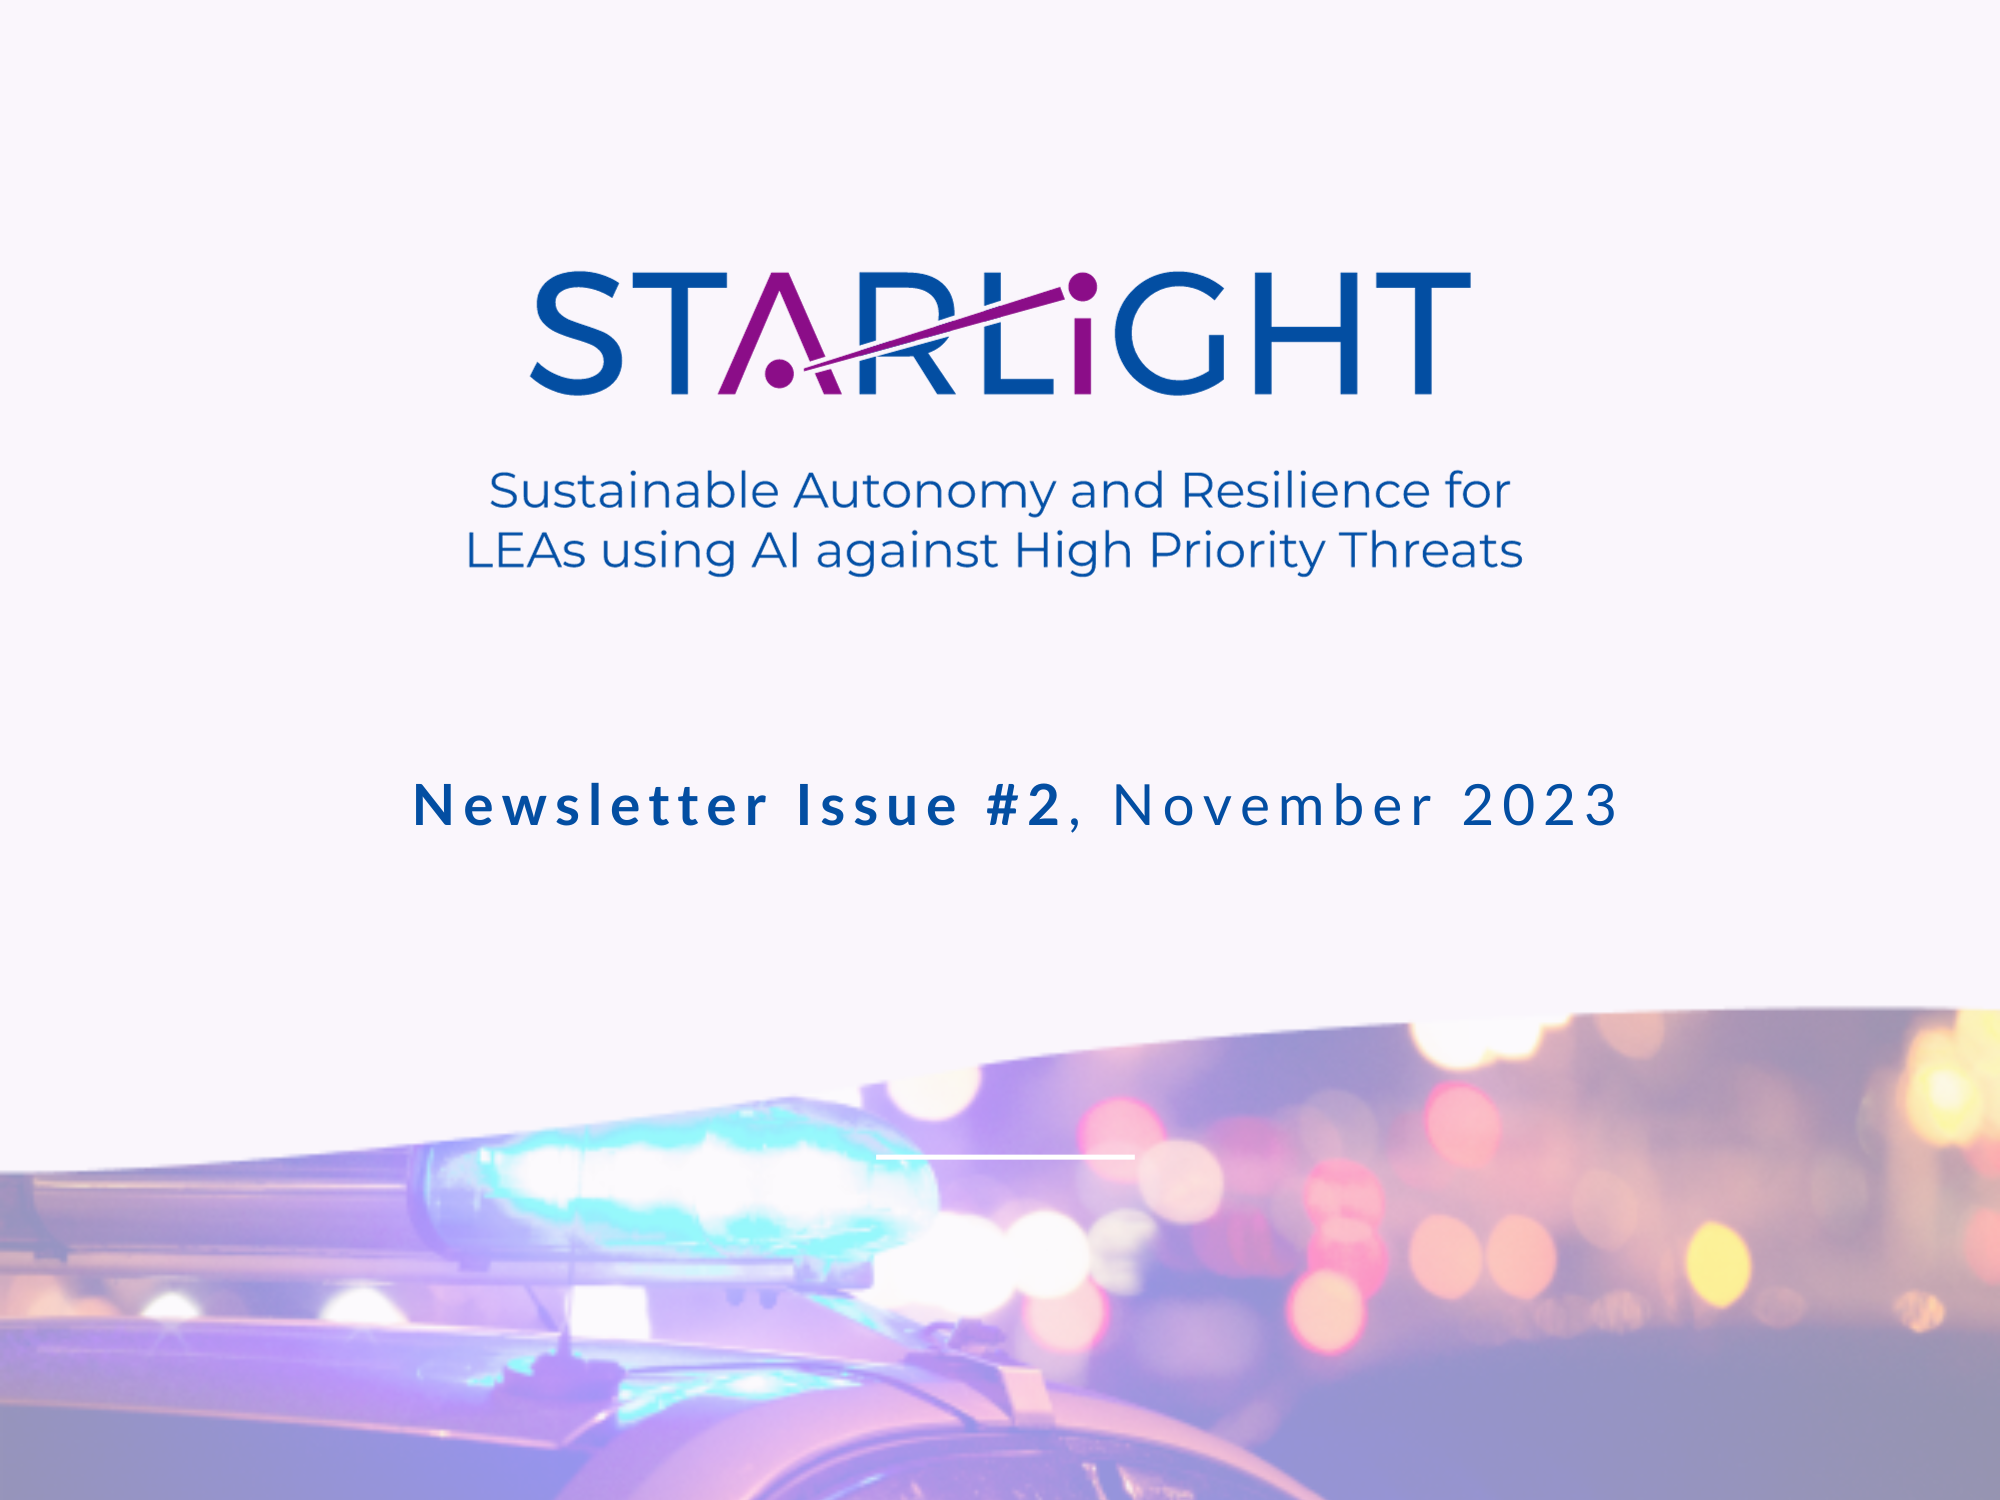 STARLIGHT Newsletter: Second Edition, November 2023